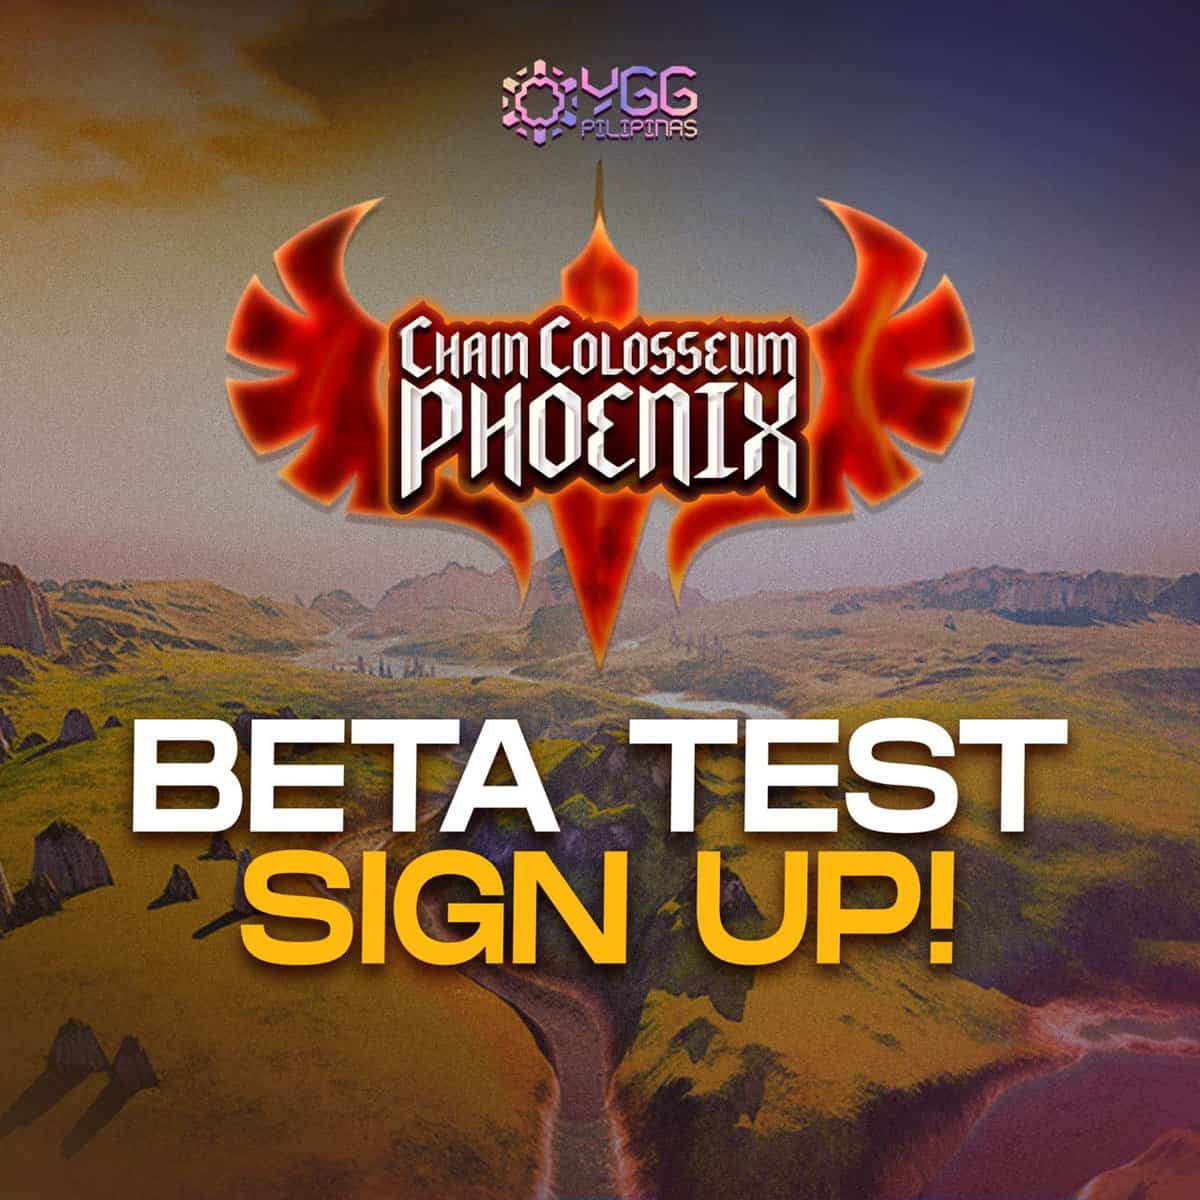 Chain Colosseum Phoenix Beta Test Sign-Up | Chain Colosseum Phoenix